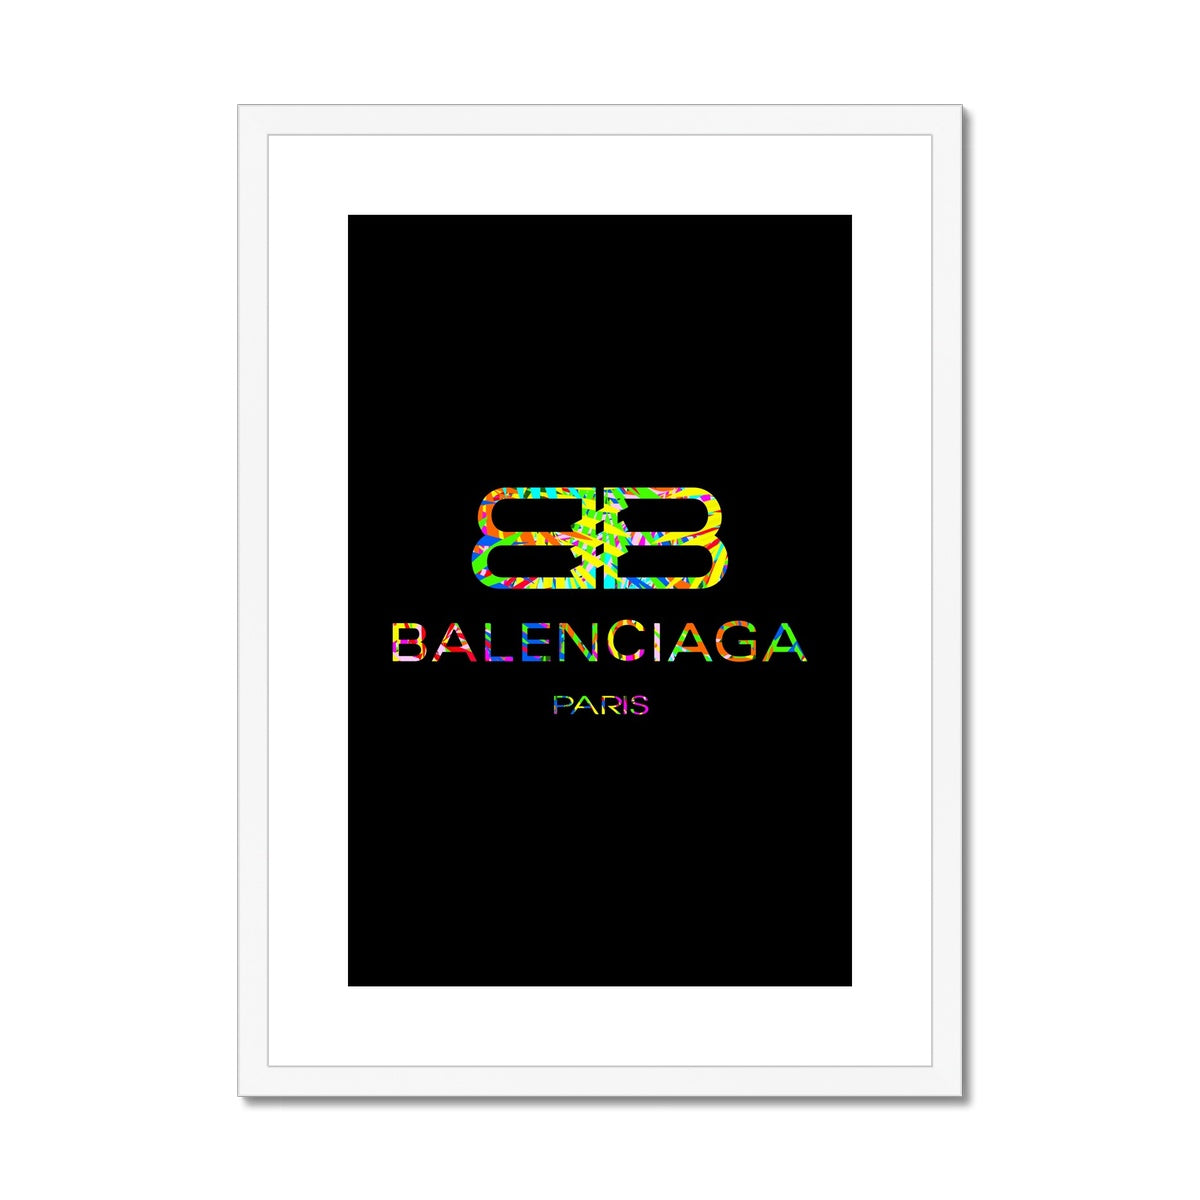 Balenciaga Paris - Framed Print